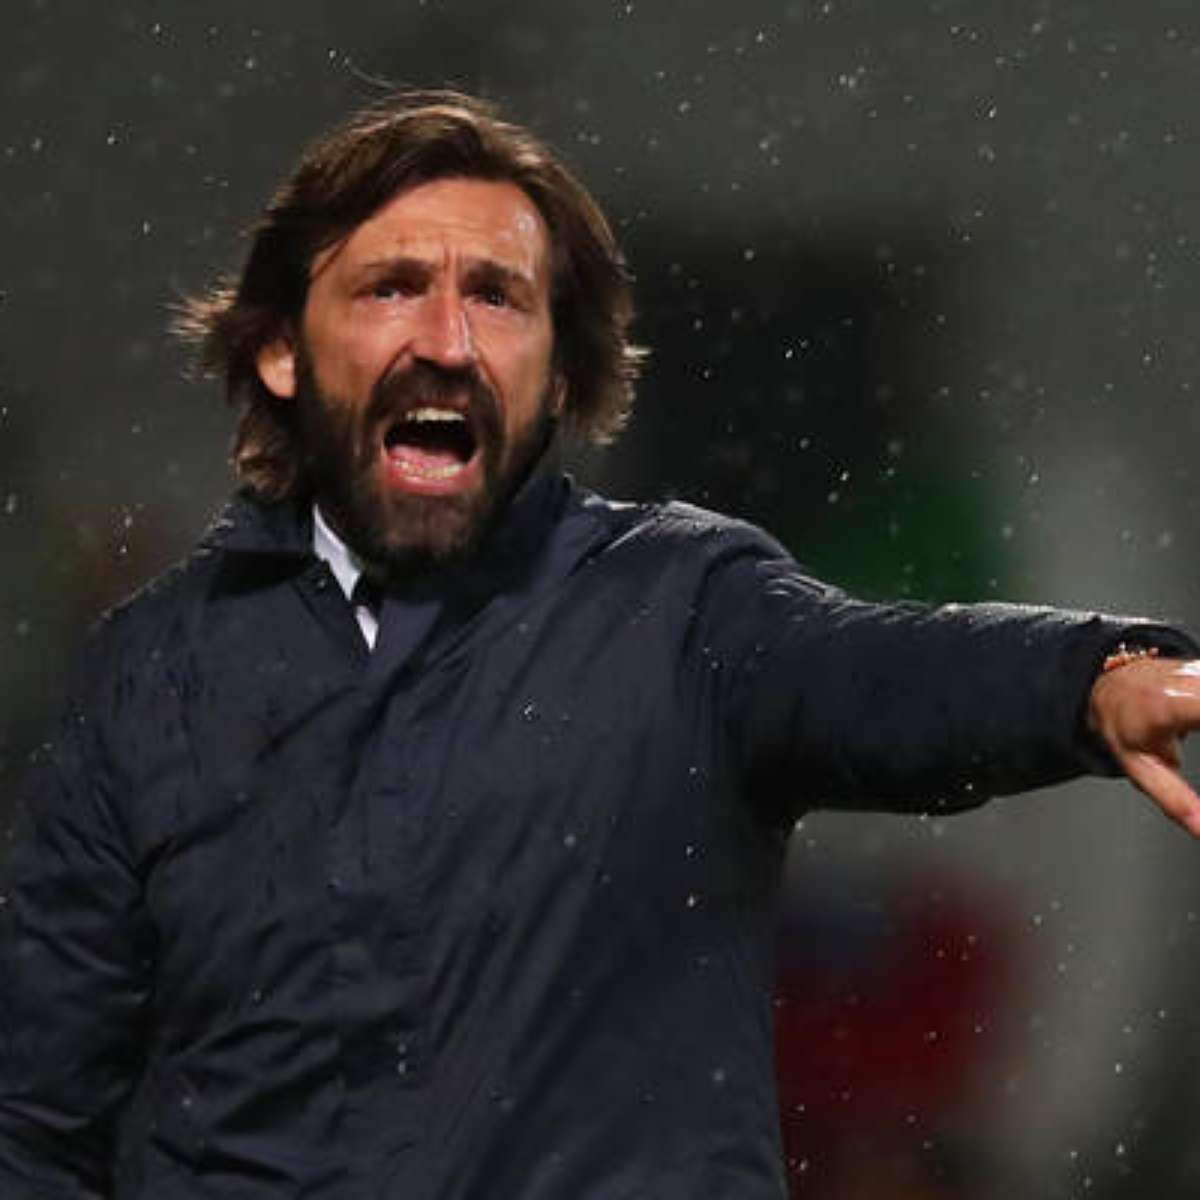 Andrea Pirlo será técnico da Sampdoria na Serie B italiana - Folha PE